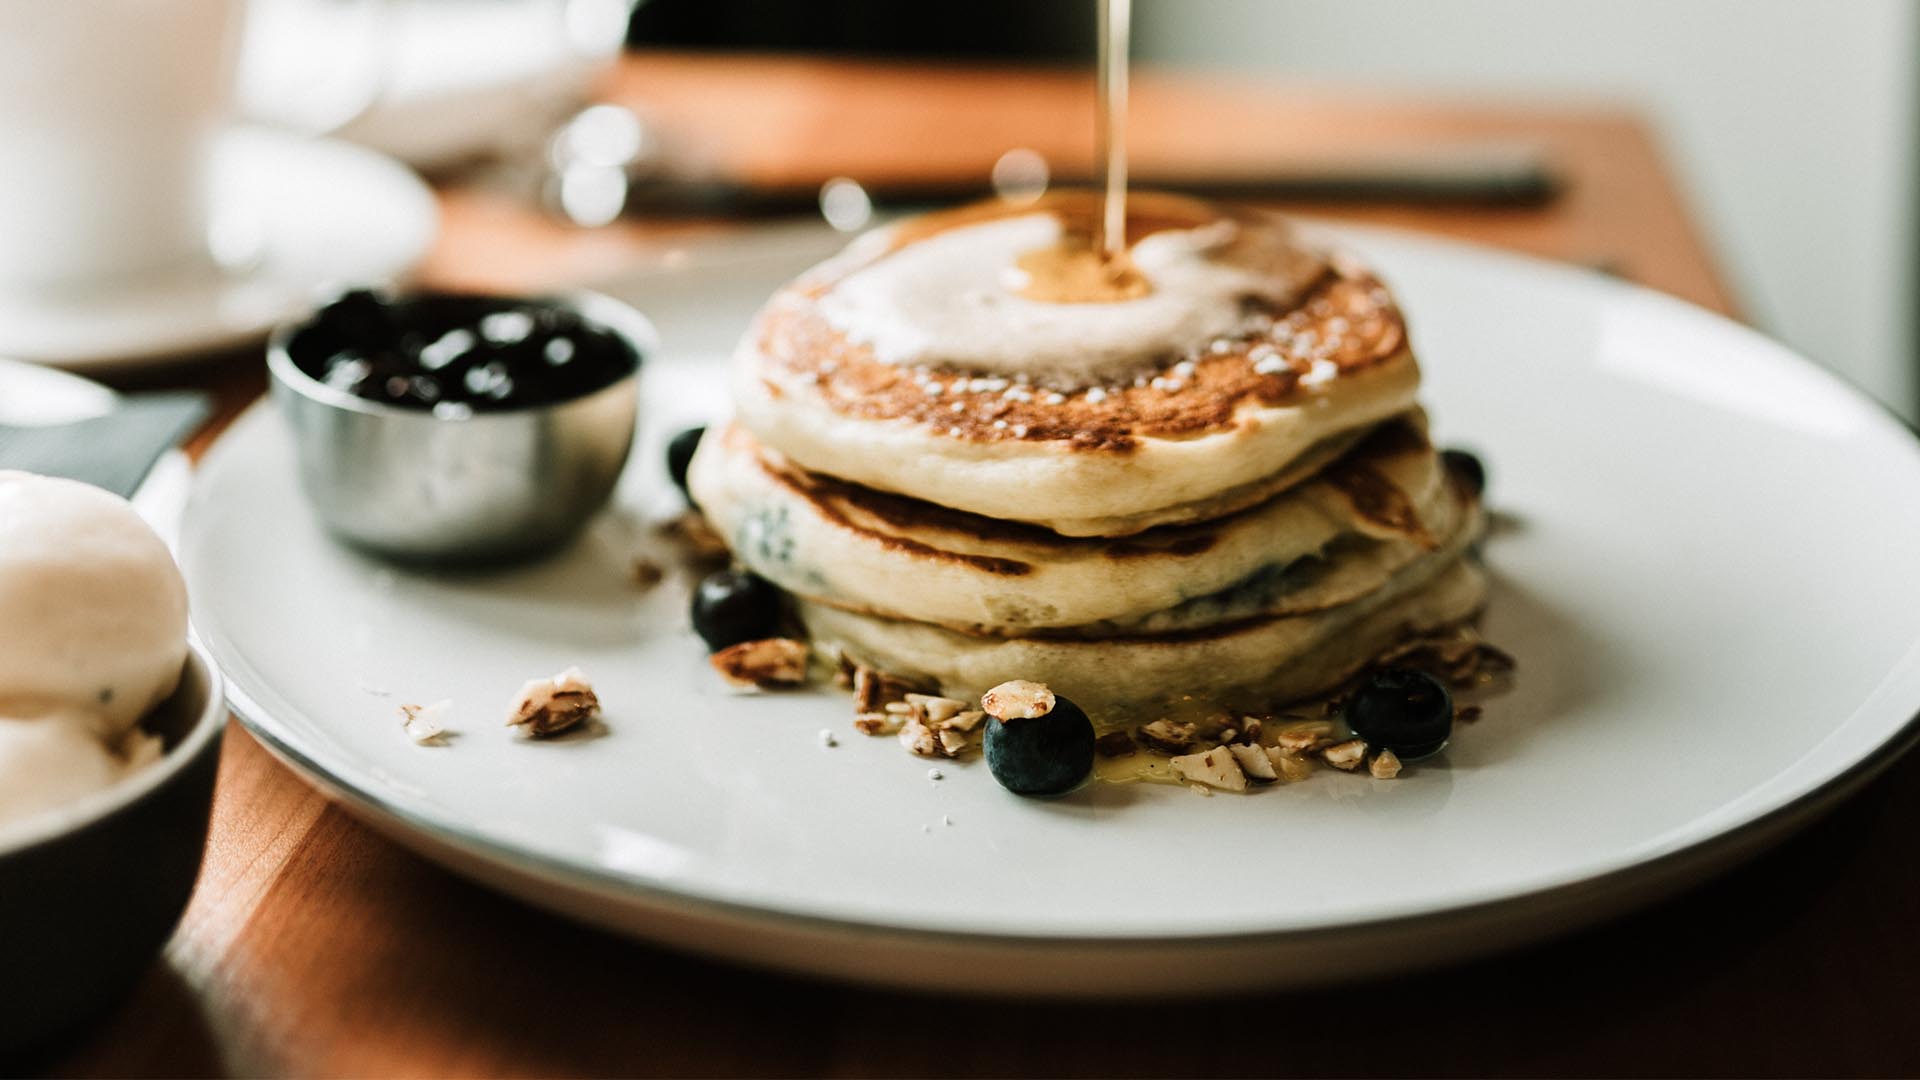 3 international pancake recipes for an indulgent Shrove Tuesday